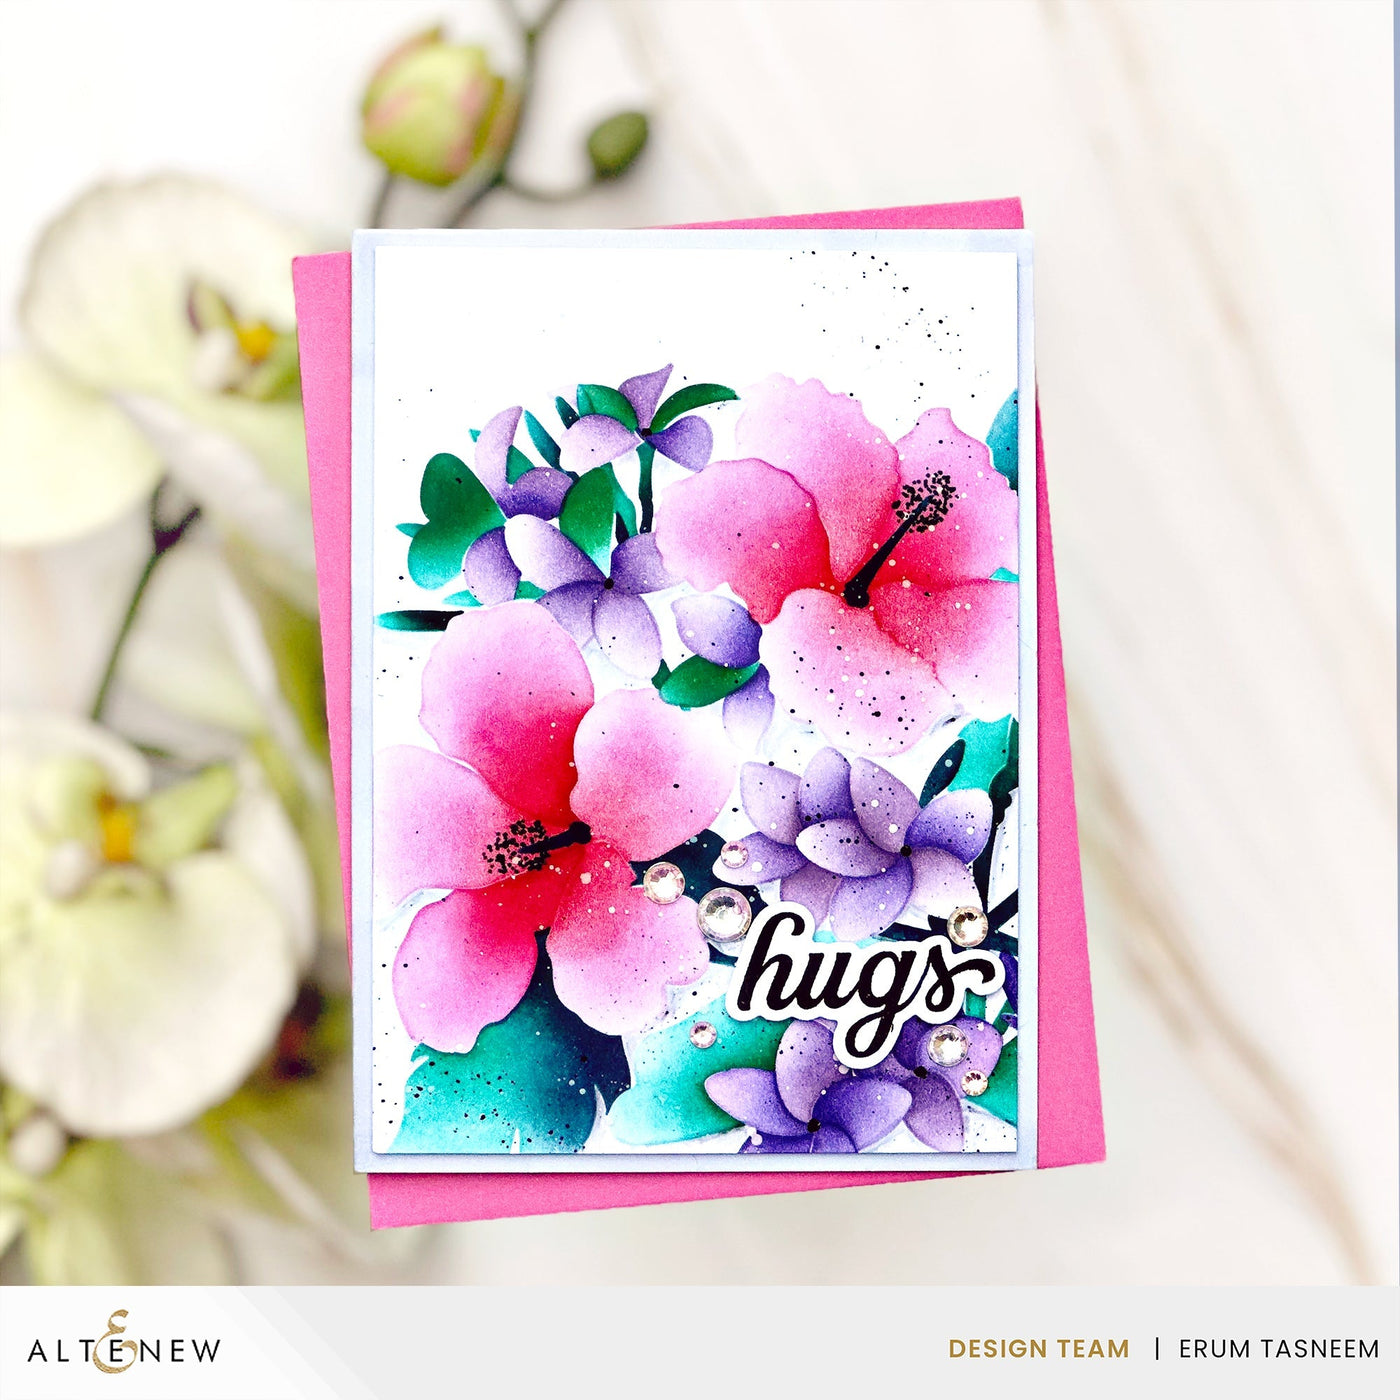 Stencil & Embossing Folder Bundle Sun-Kissed Blooms